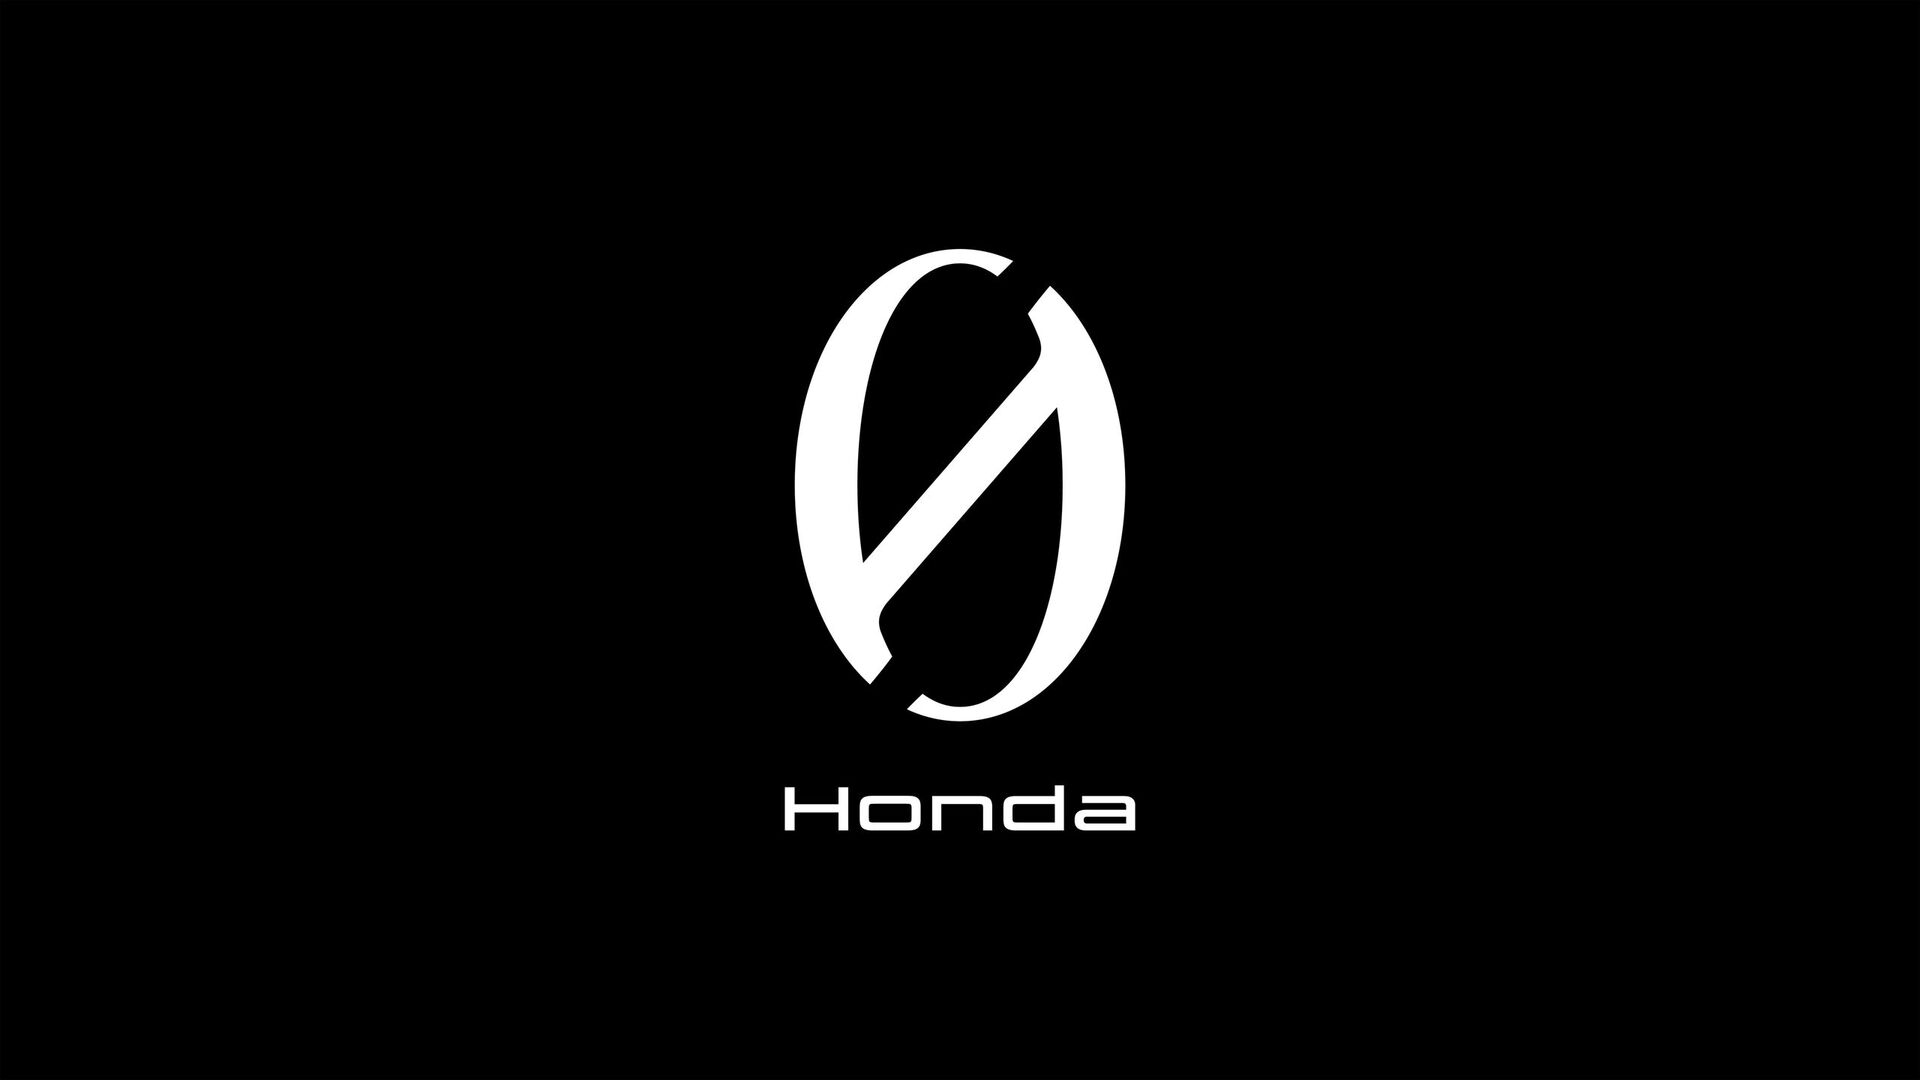 Honda 0 Series logo